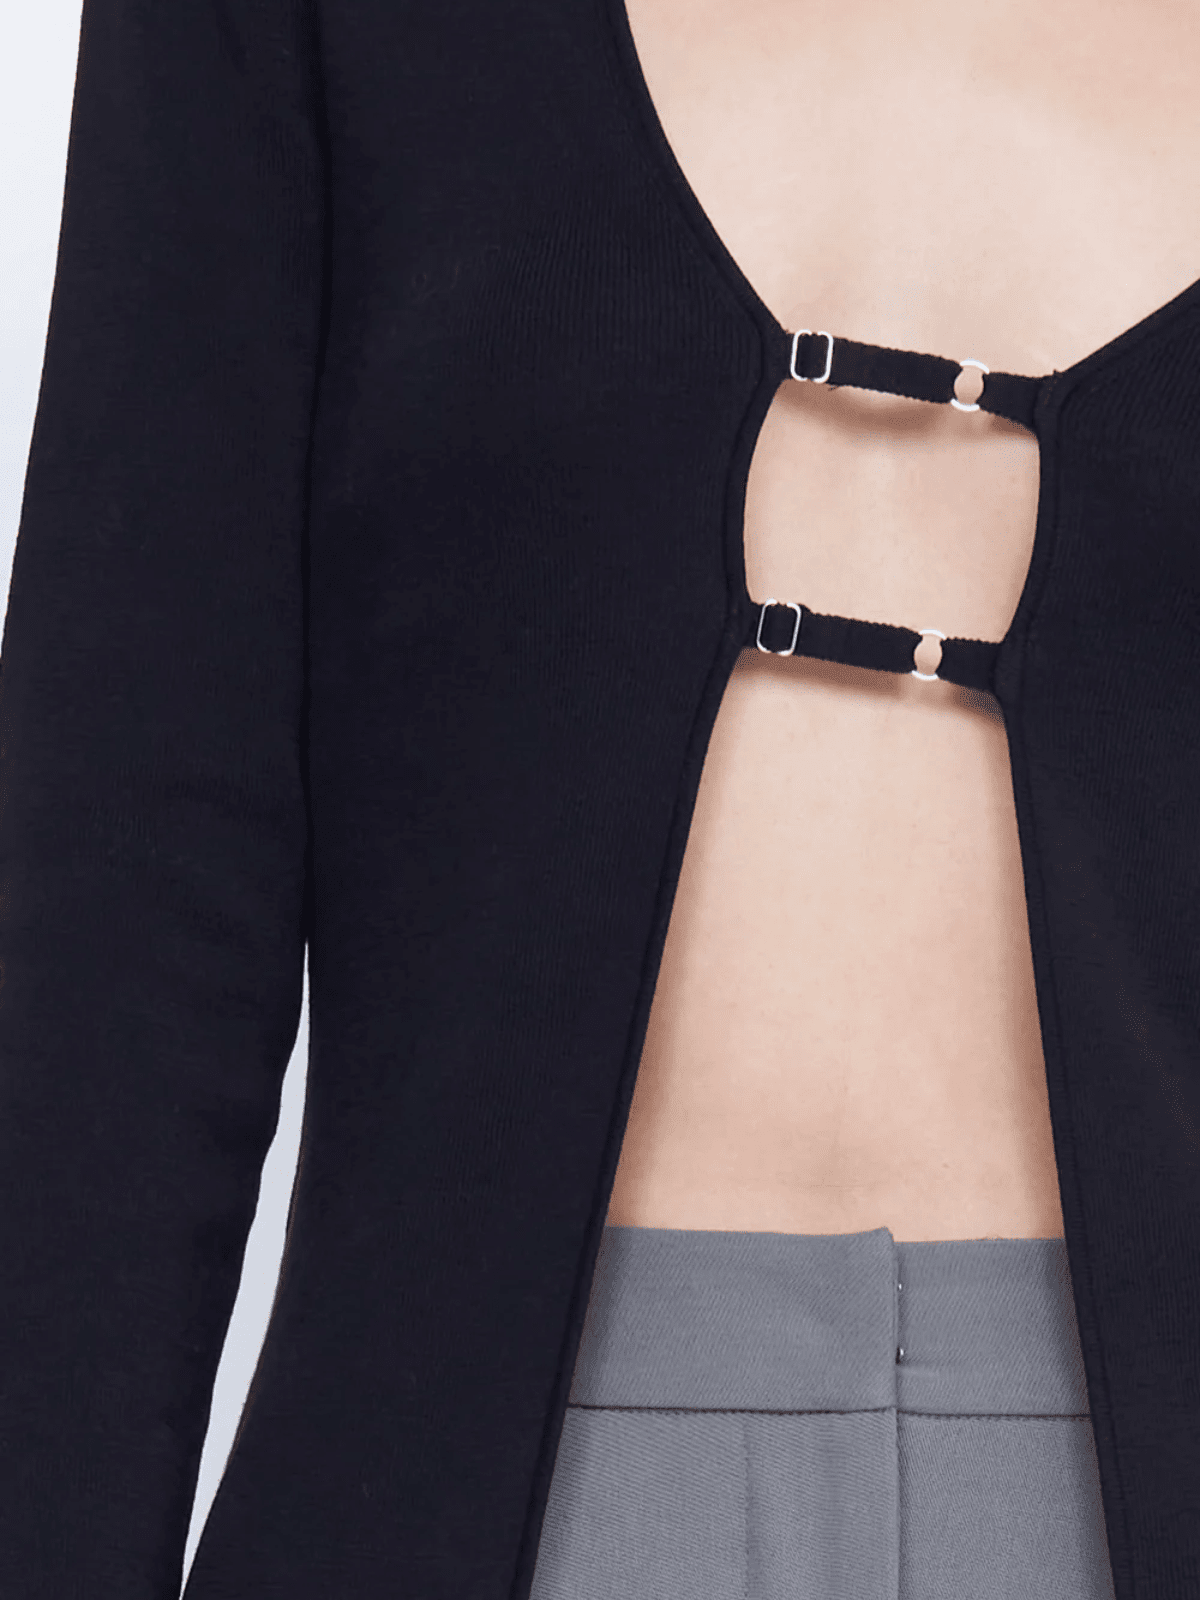 Teodora Knit Long Sleeve Top - Black Tops Bec + Bridge 